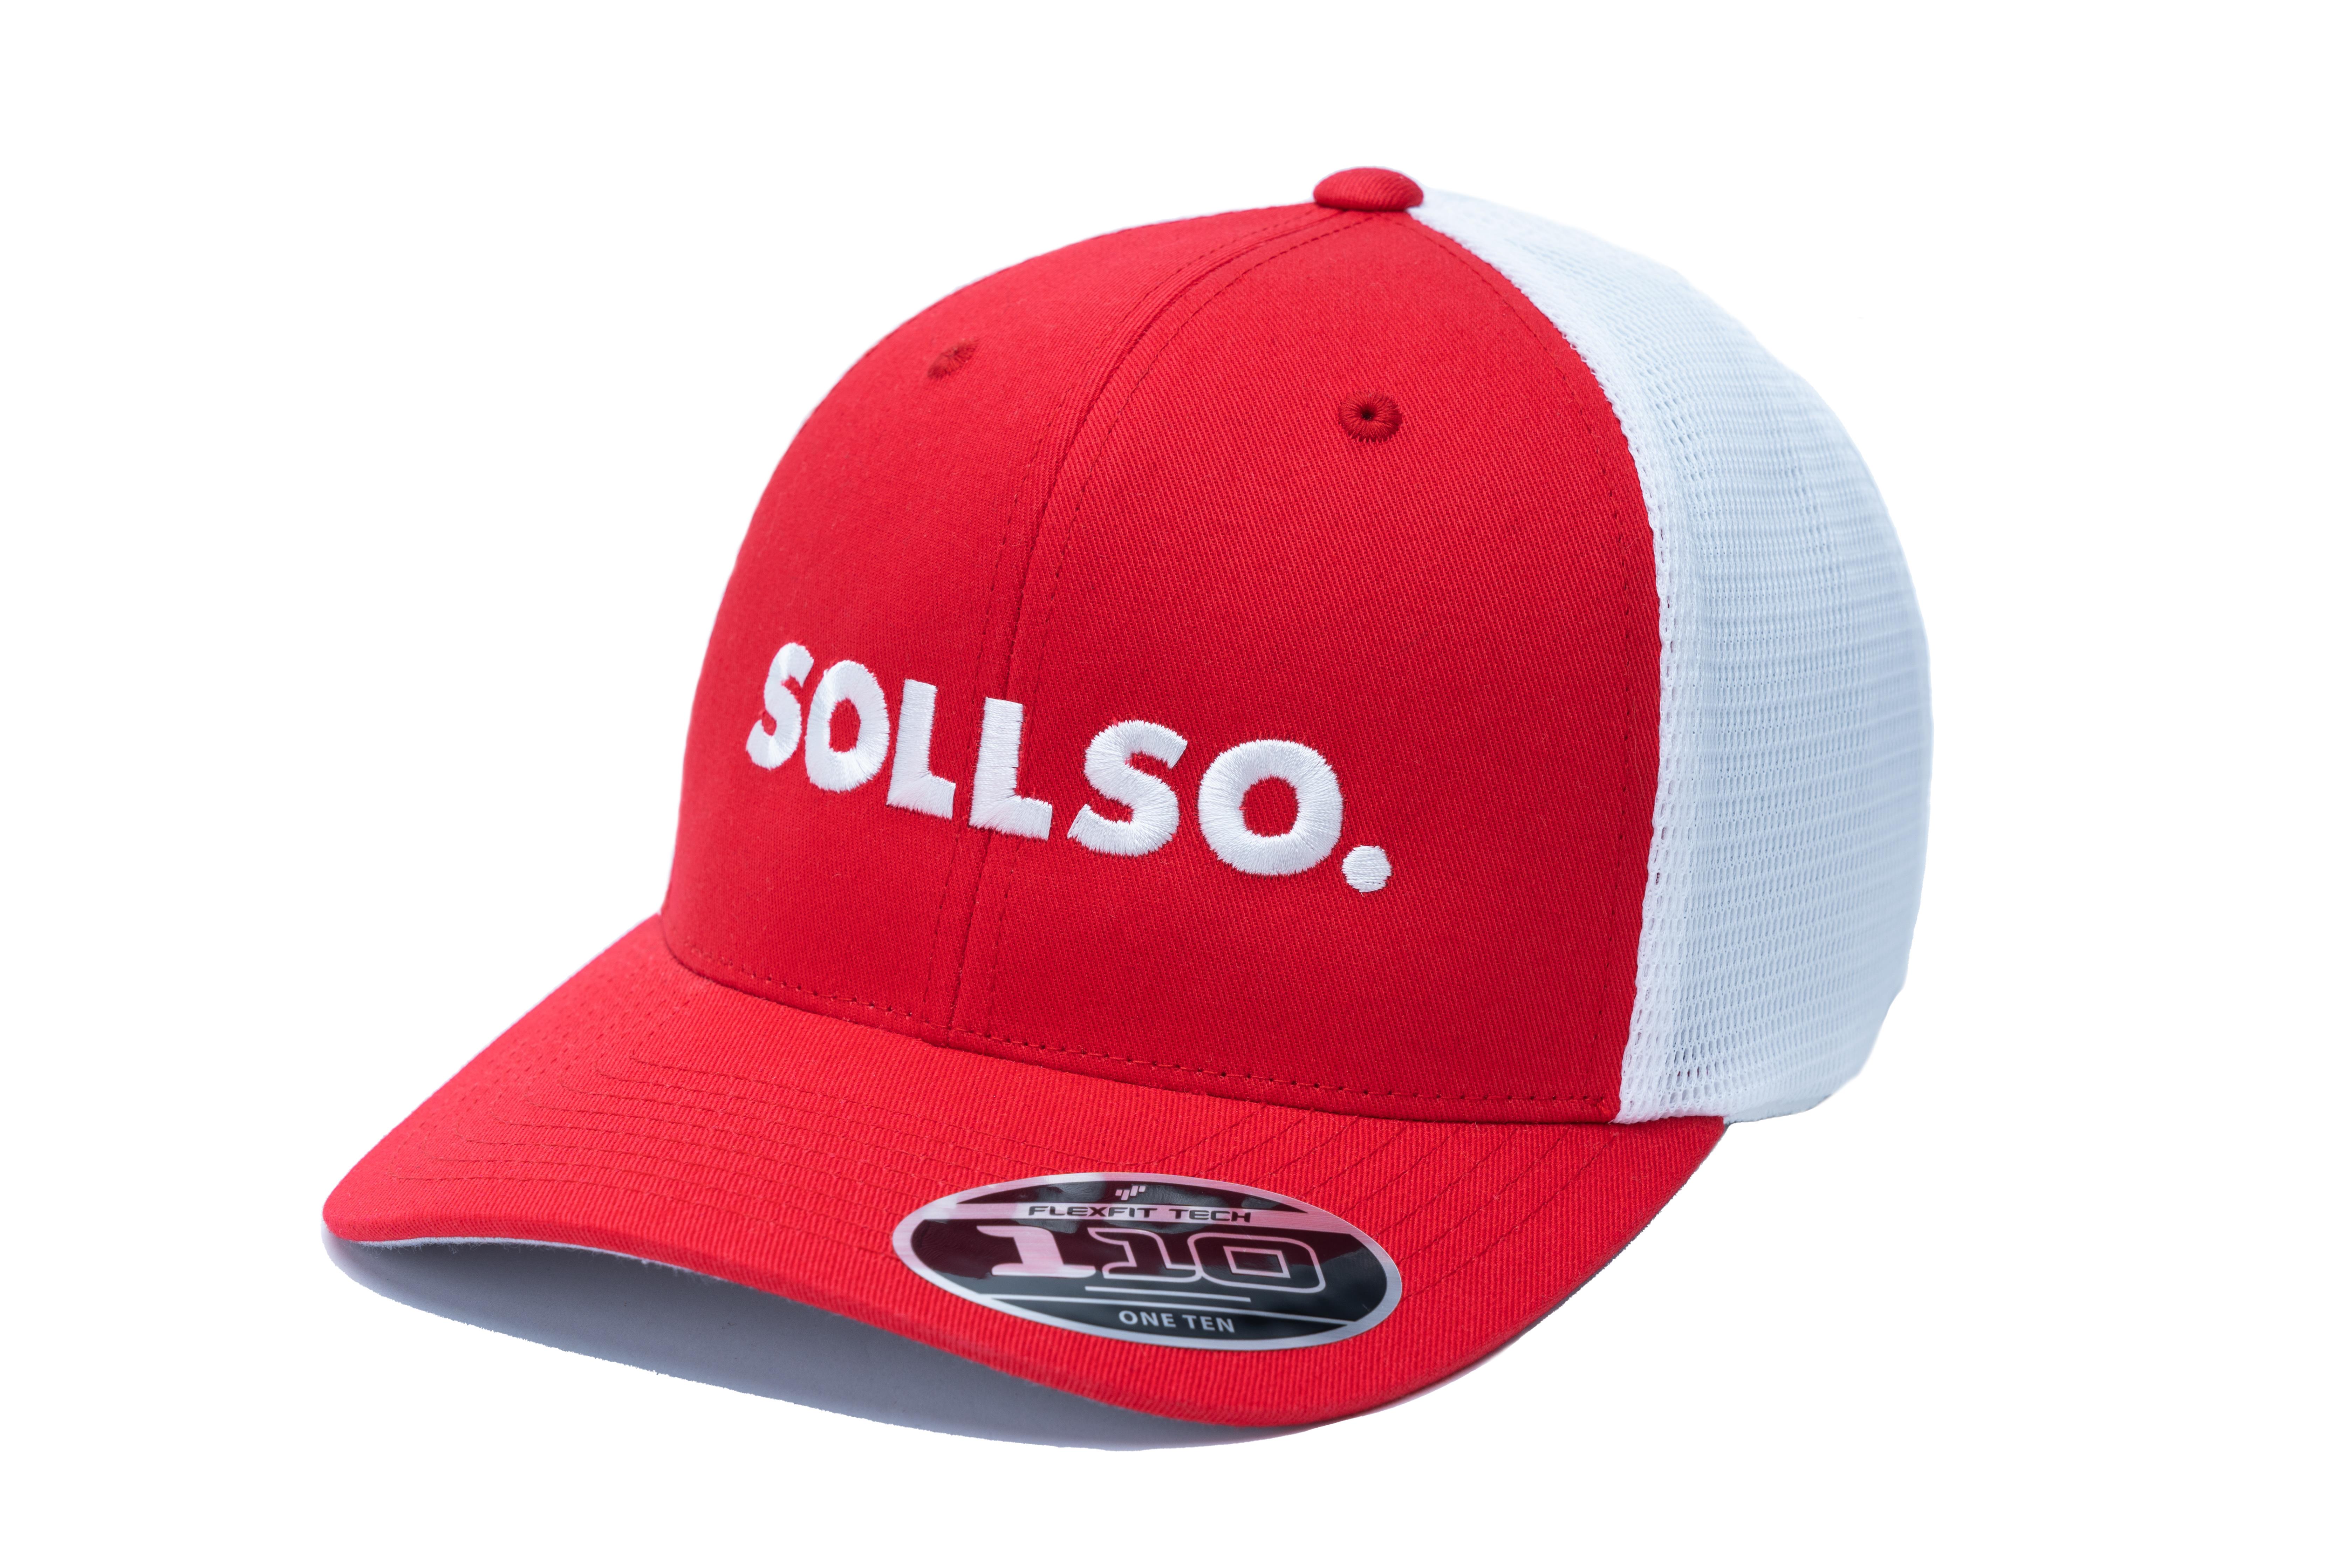 SOLLSO. Mesh 2-Tone Cap, Red-White